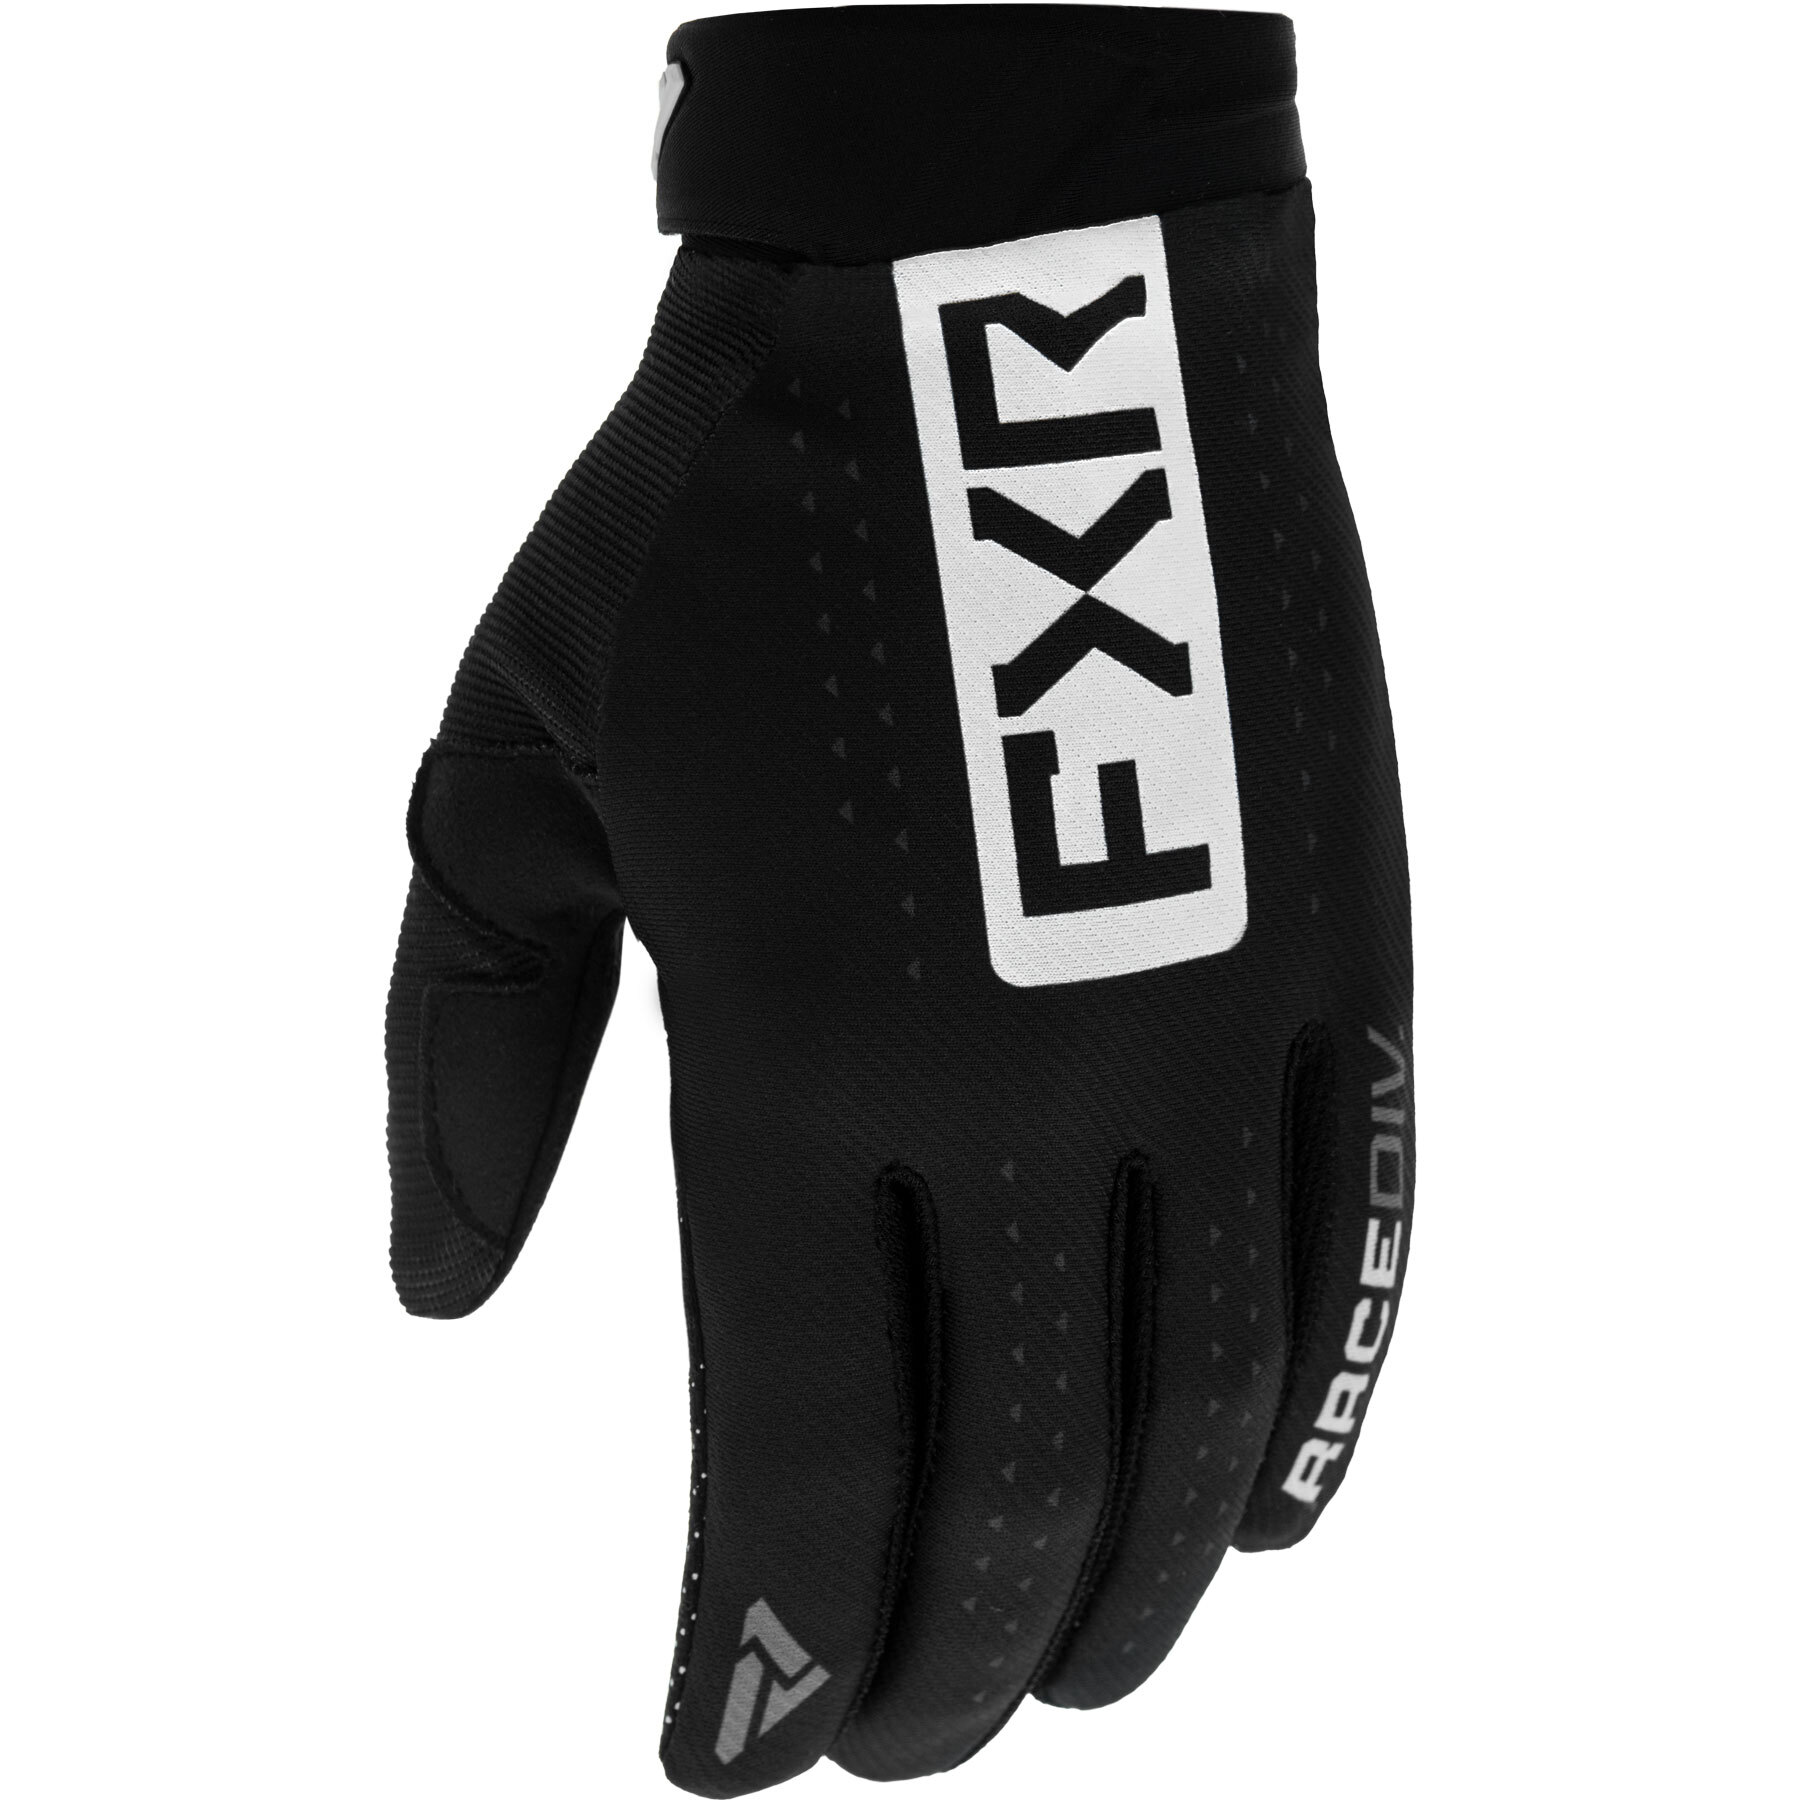 Reflex MX Gloves by FXR®